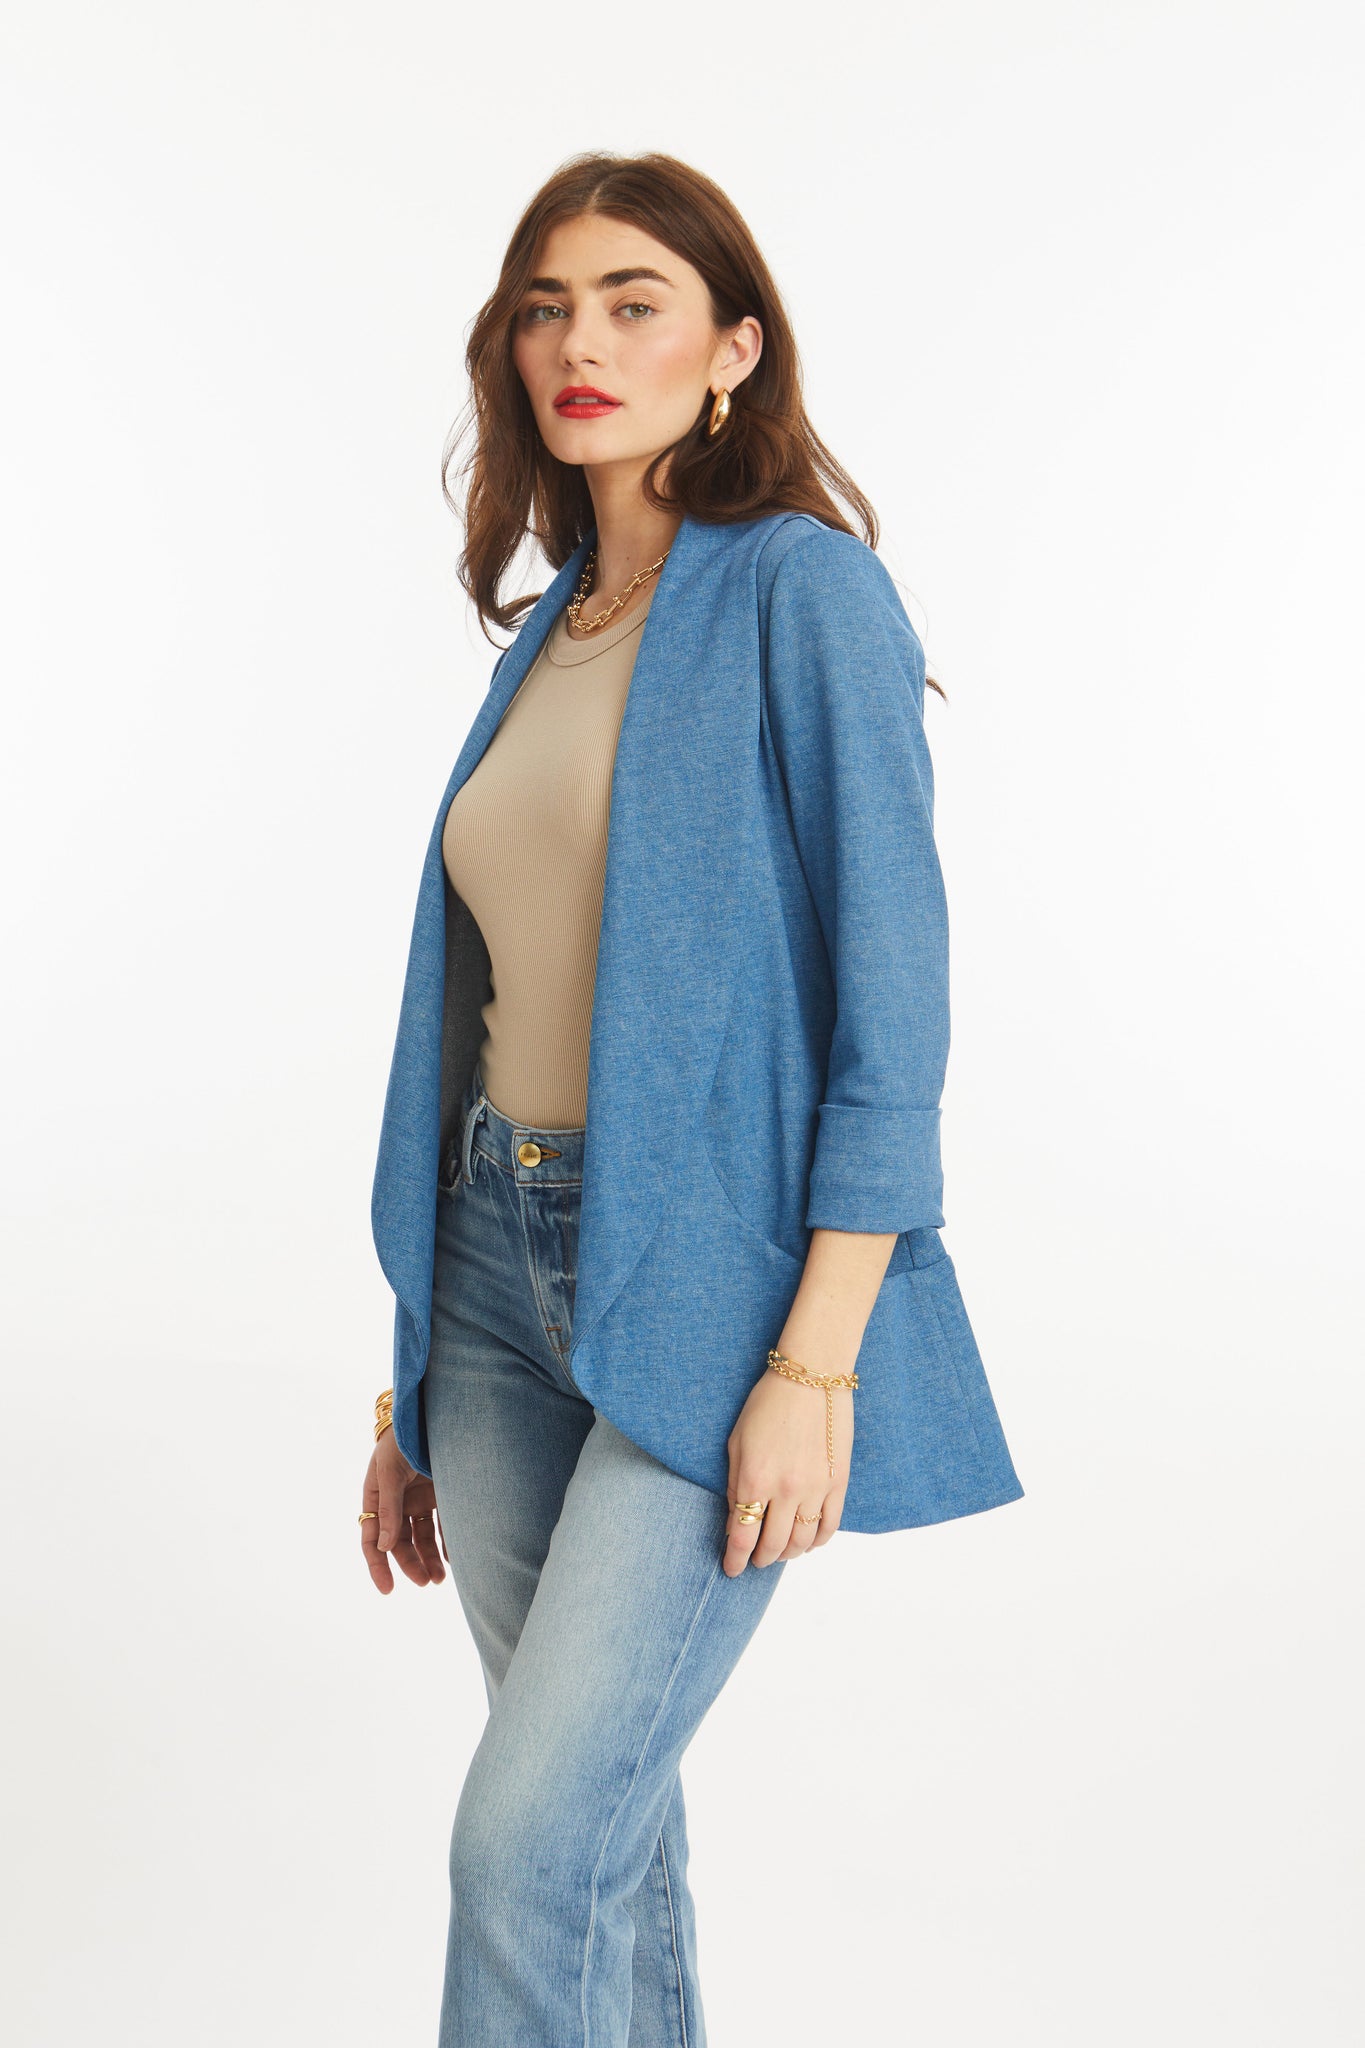 Melanie Knit Jacket in Denim Finish - Light Denim blue